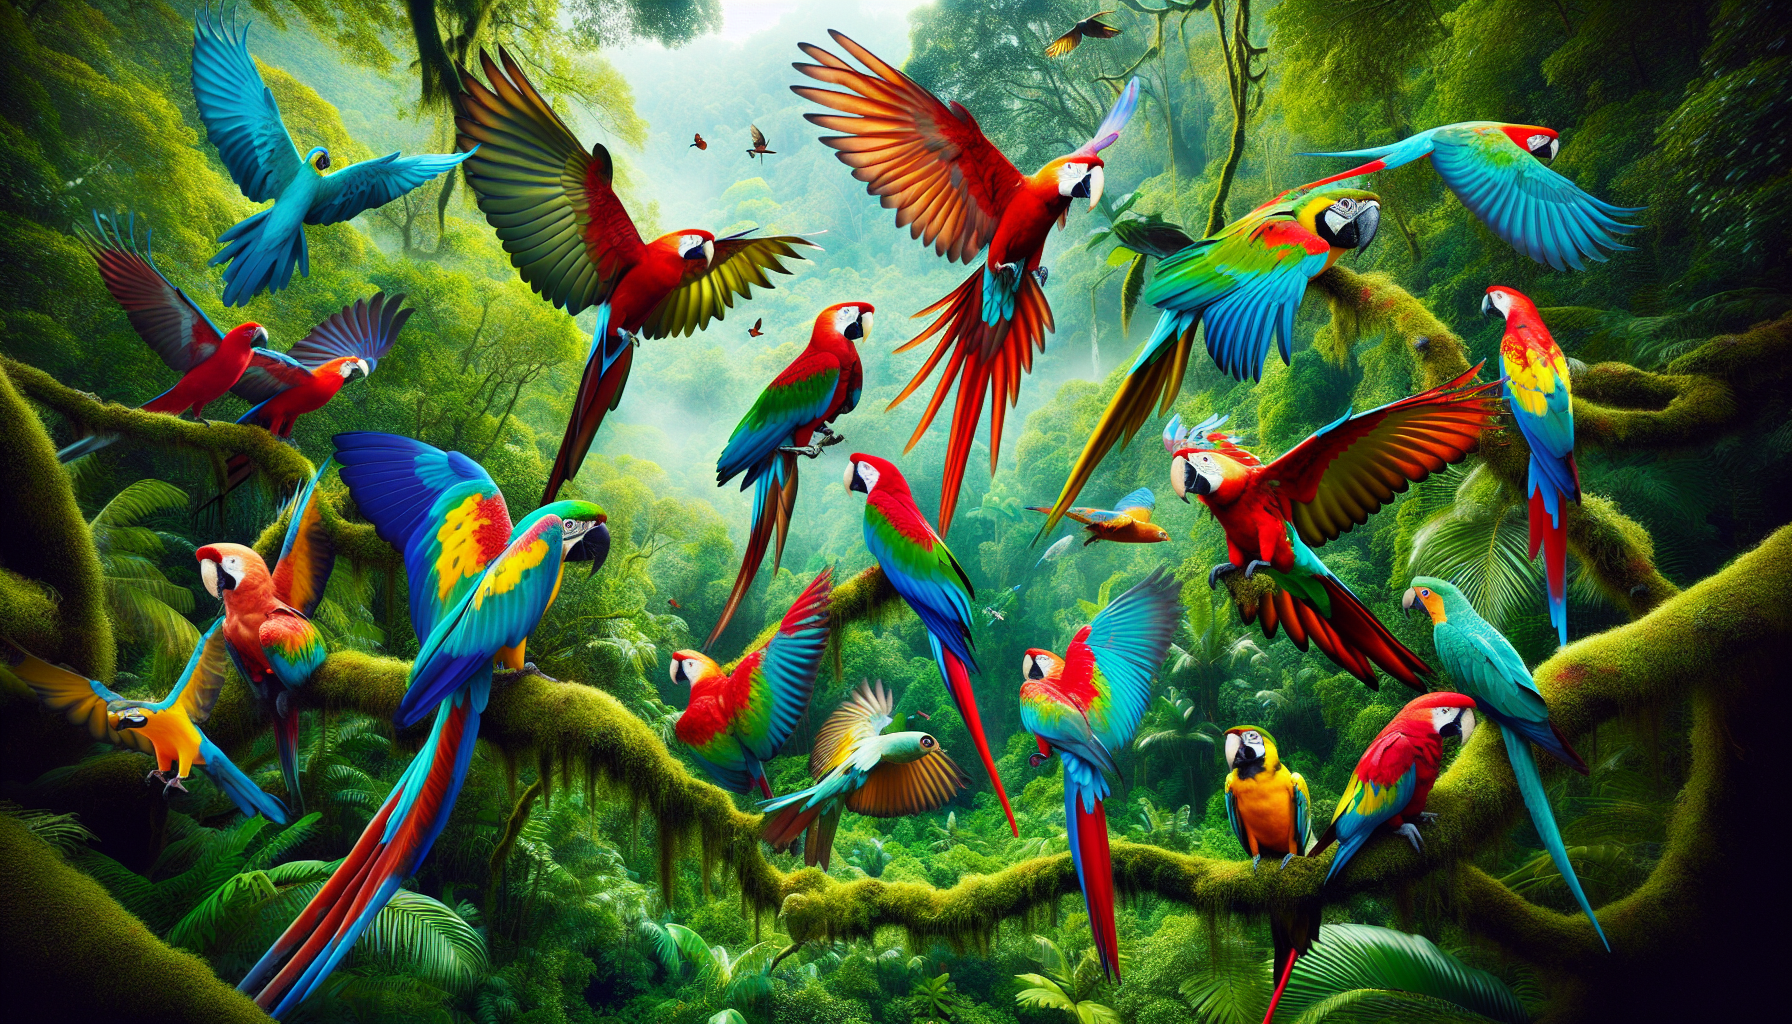 Colorful bird species in the rainforest of Tenorio Volcano National Park